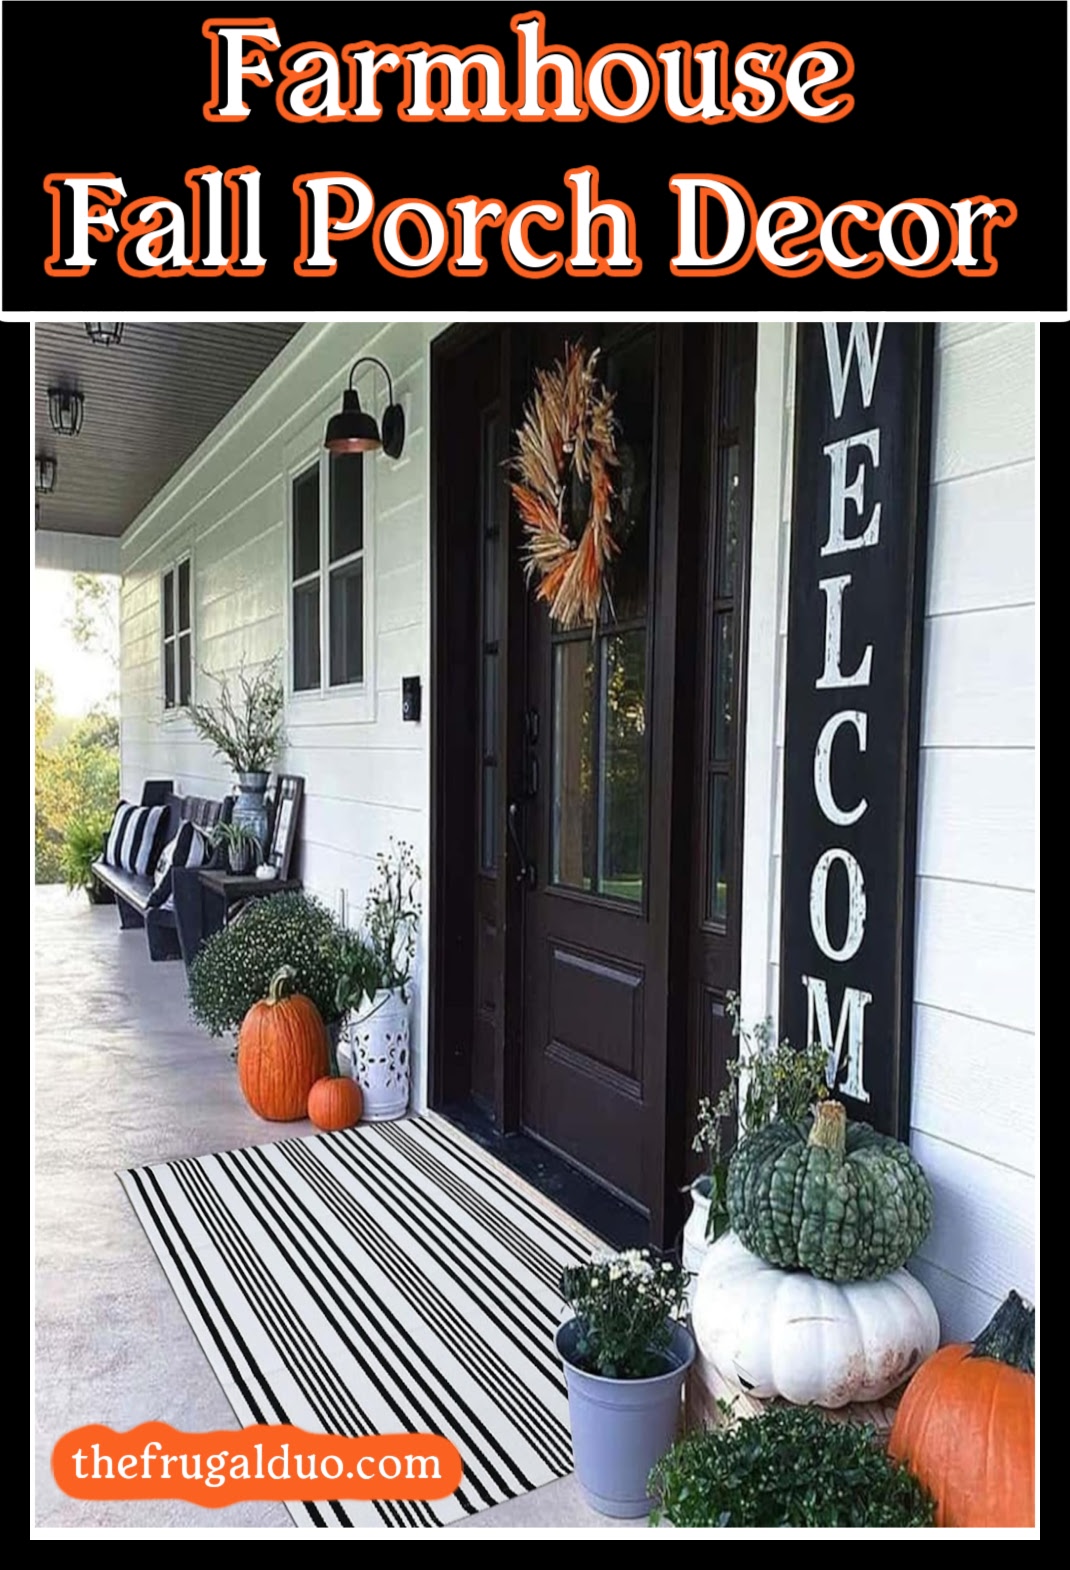 Farmhouse Fall Porch Decor: Be the envy of the neighborhood